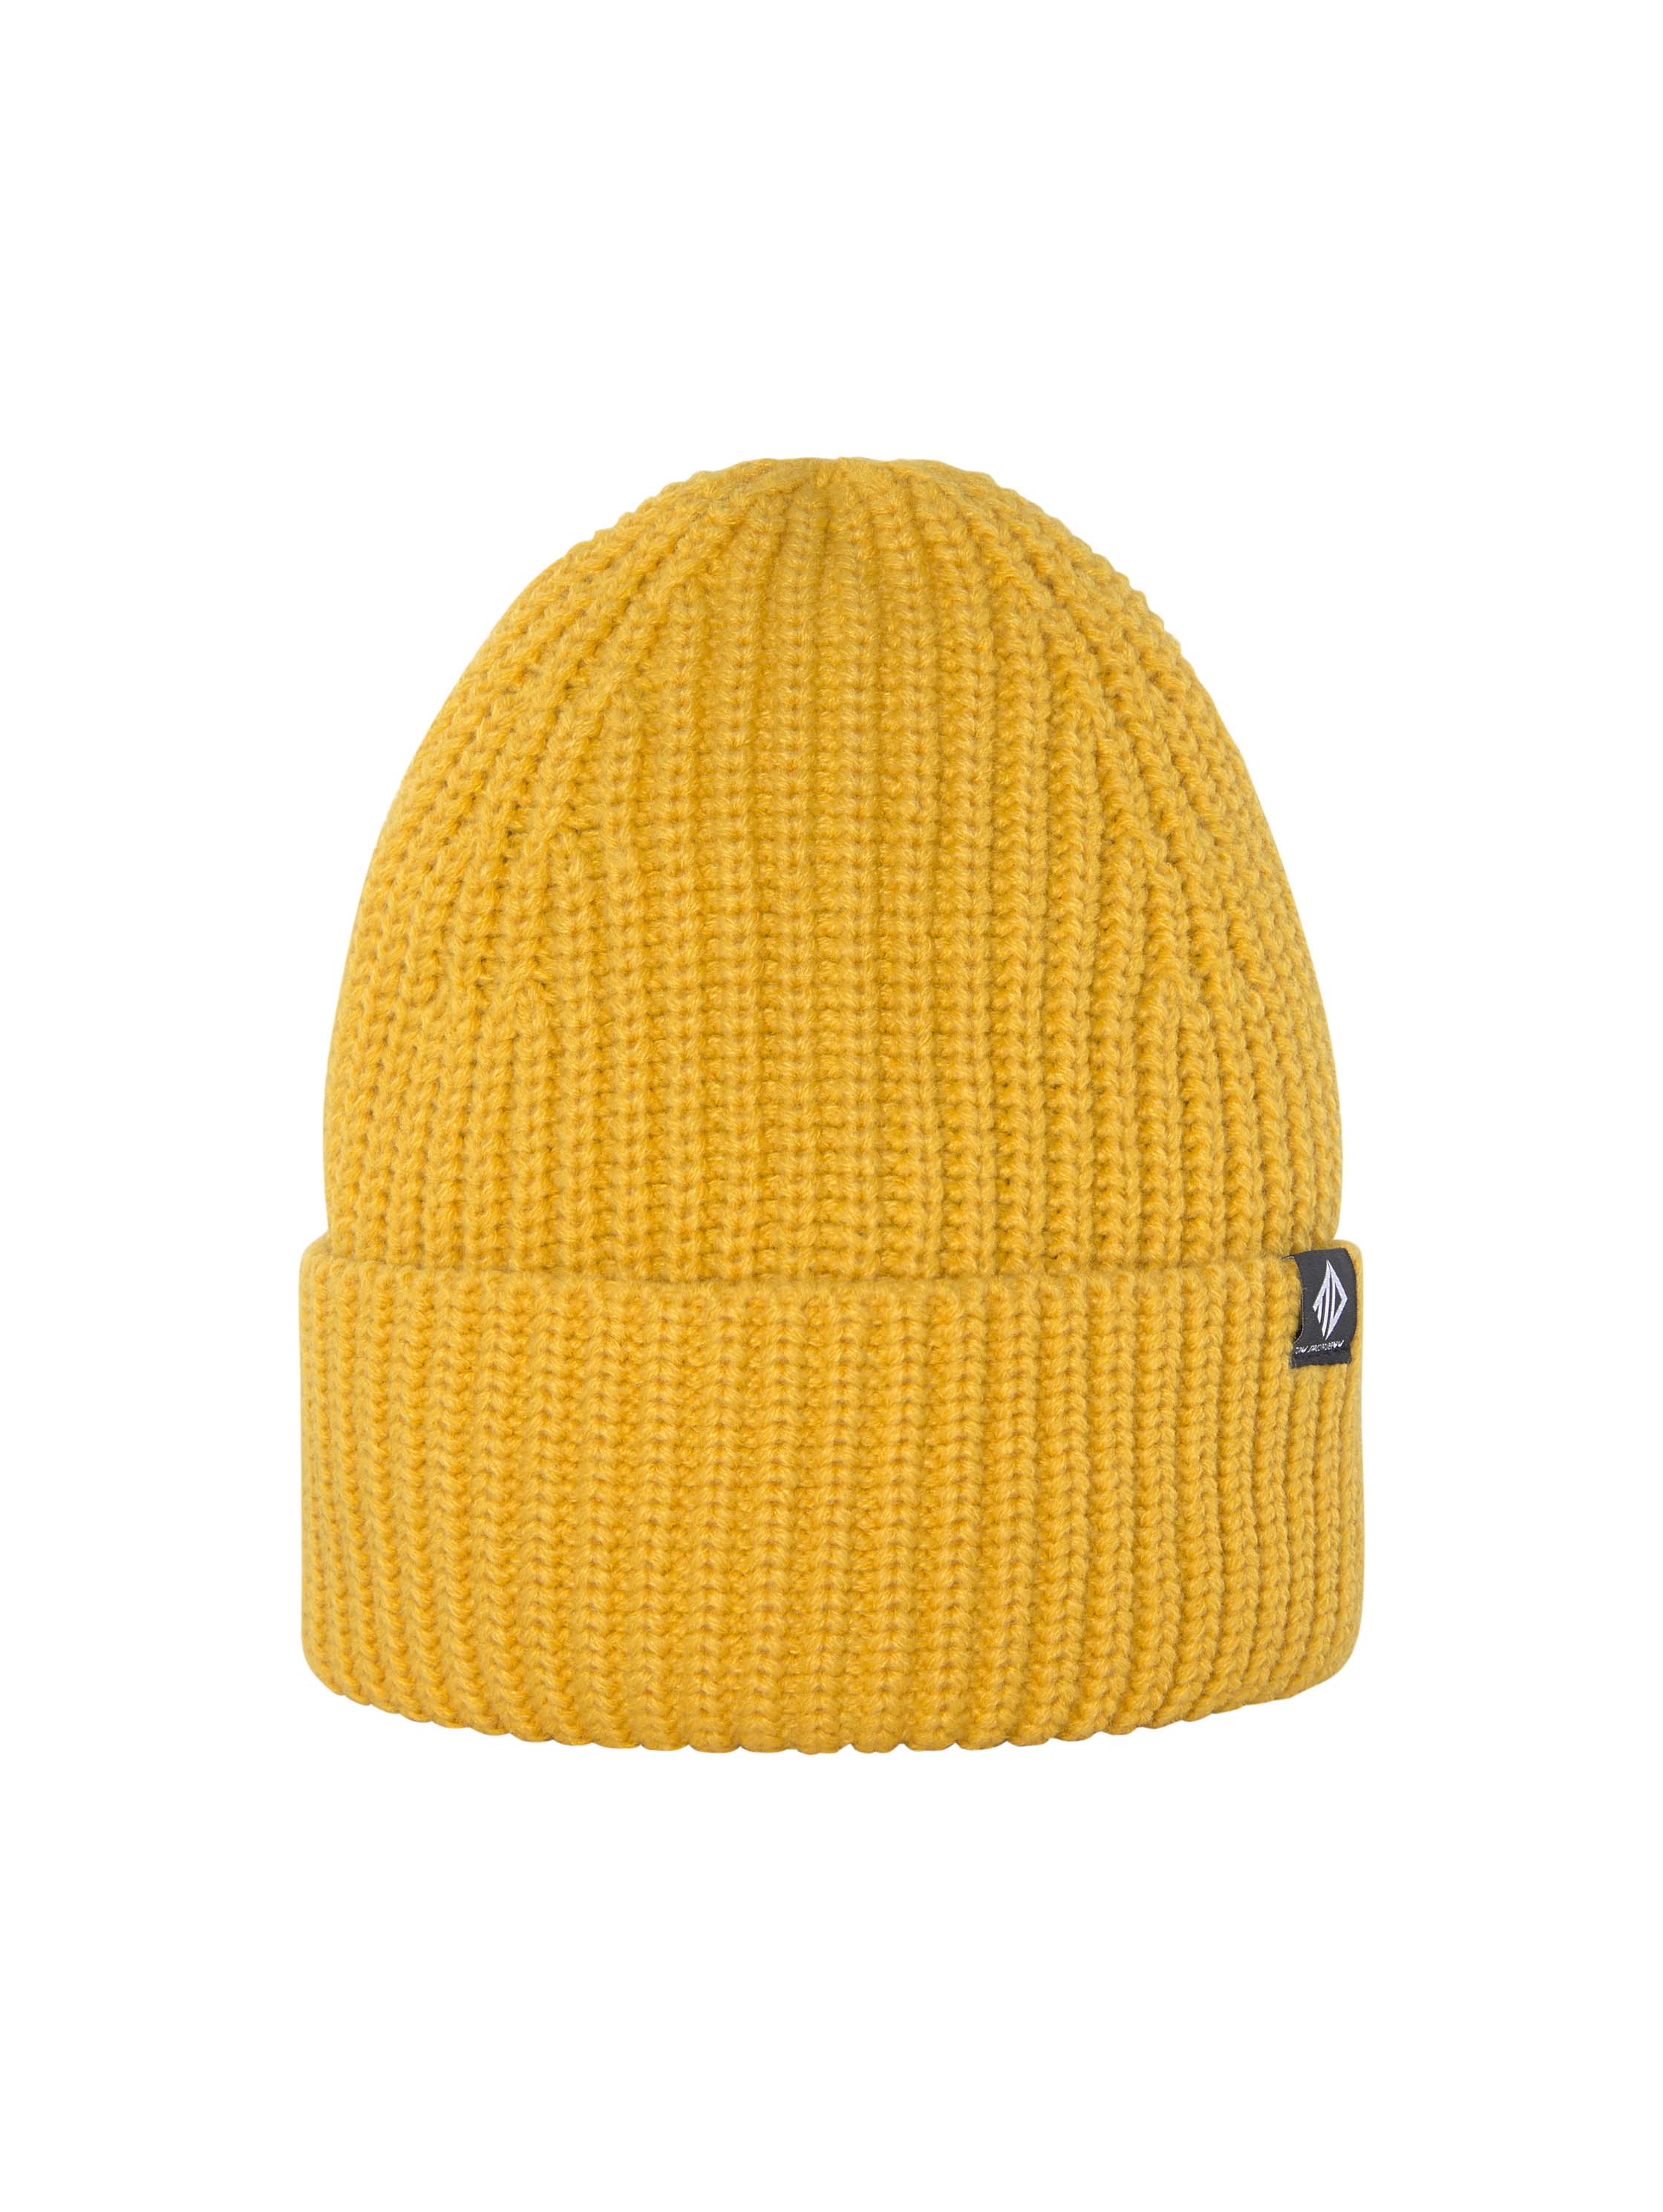 structured hat, star shine yellow